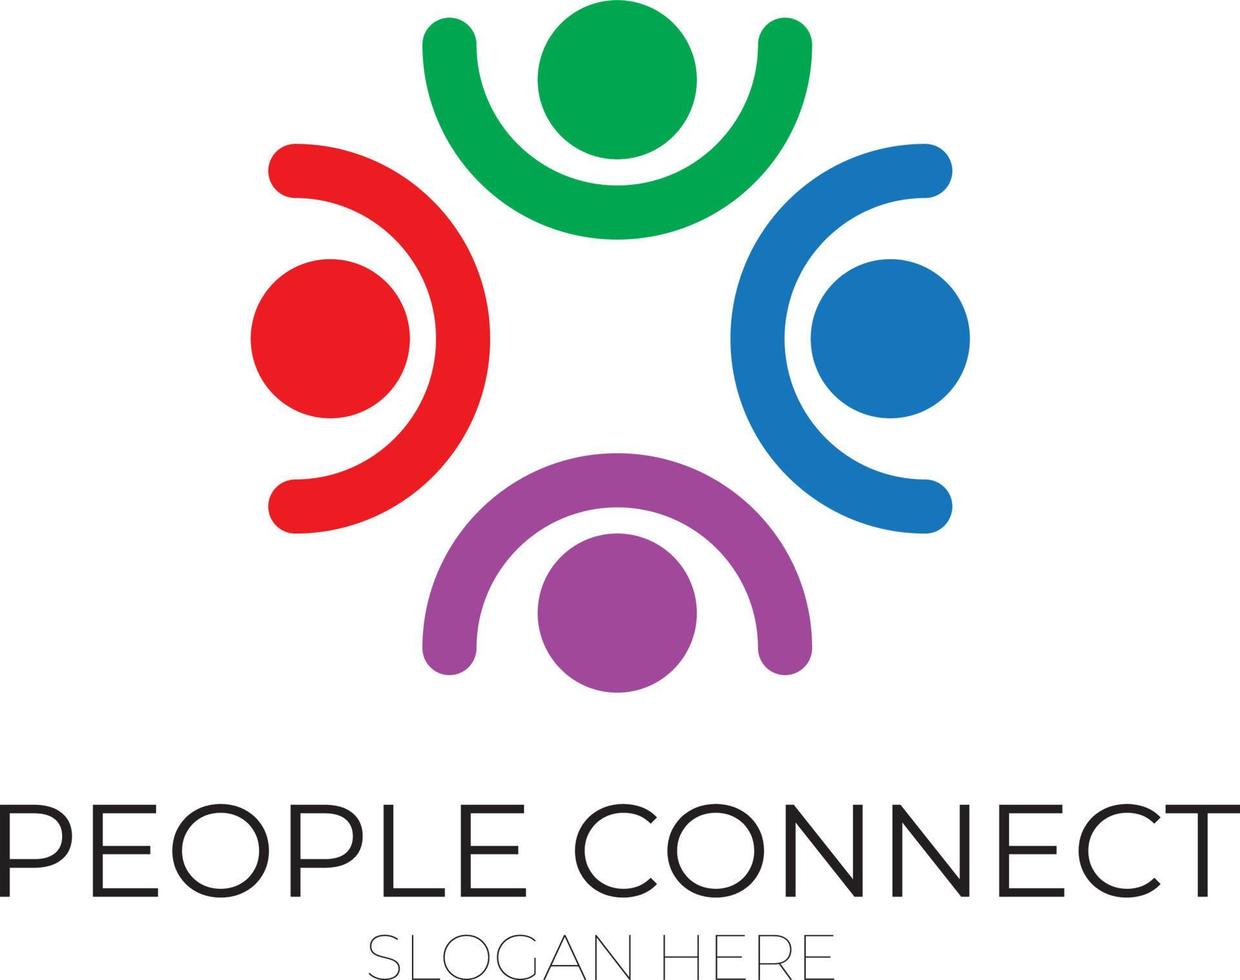 People connect logo.communication logo. family logo. Social Network Team Partners Friends logo design vector